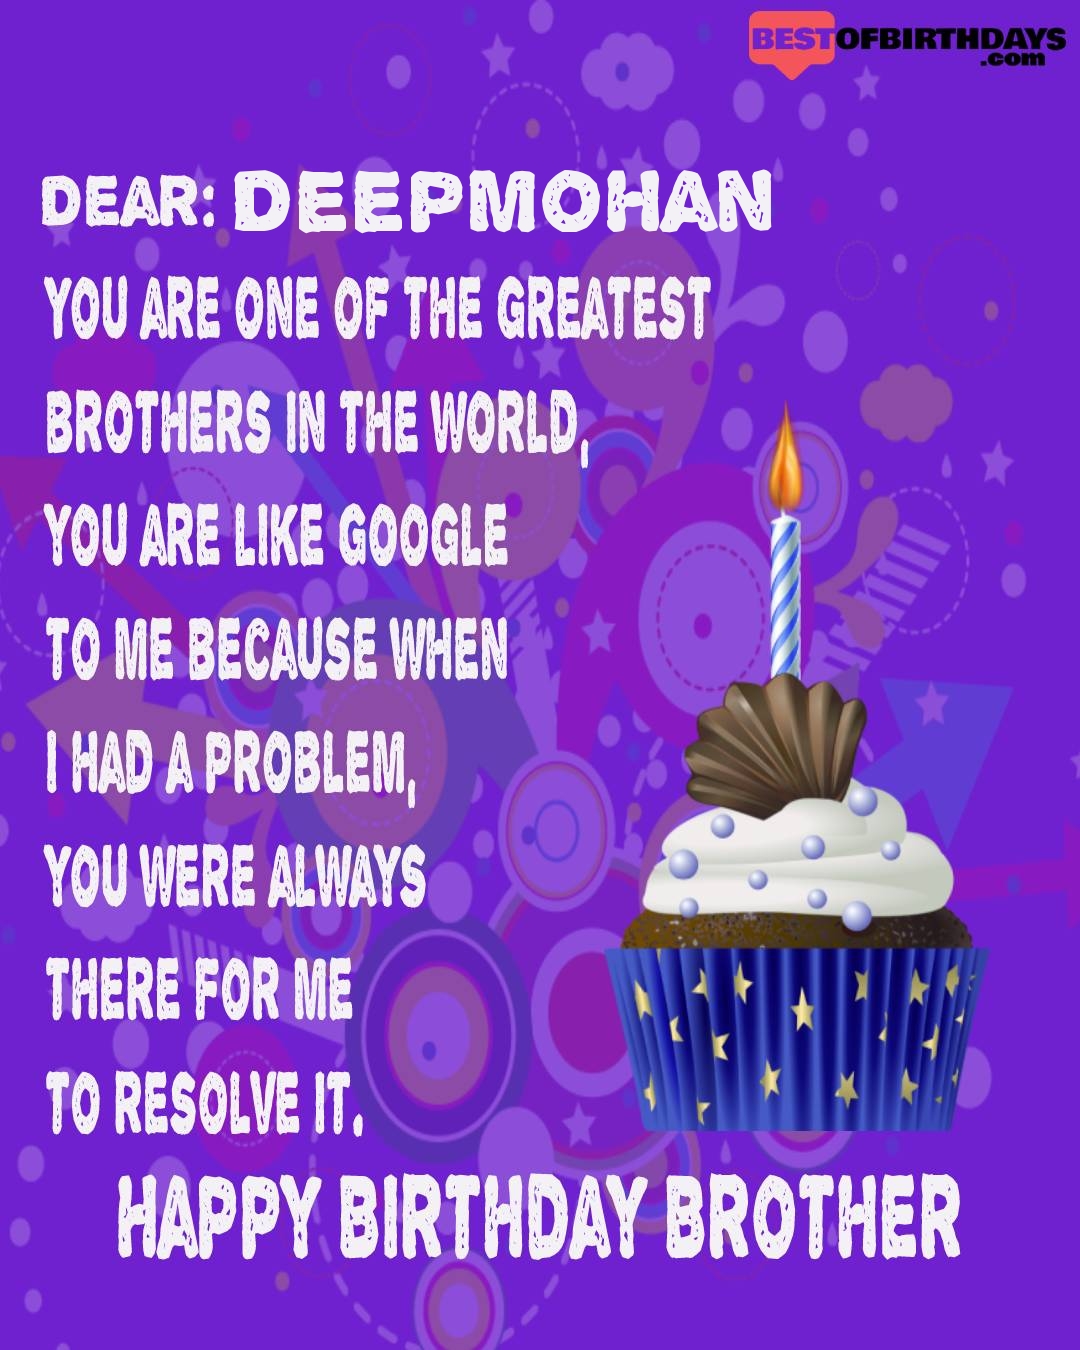 Happy birthday deepmohan bhai brother bro